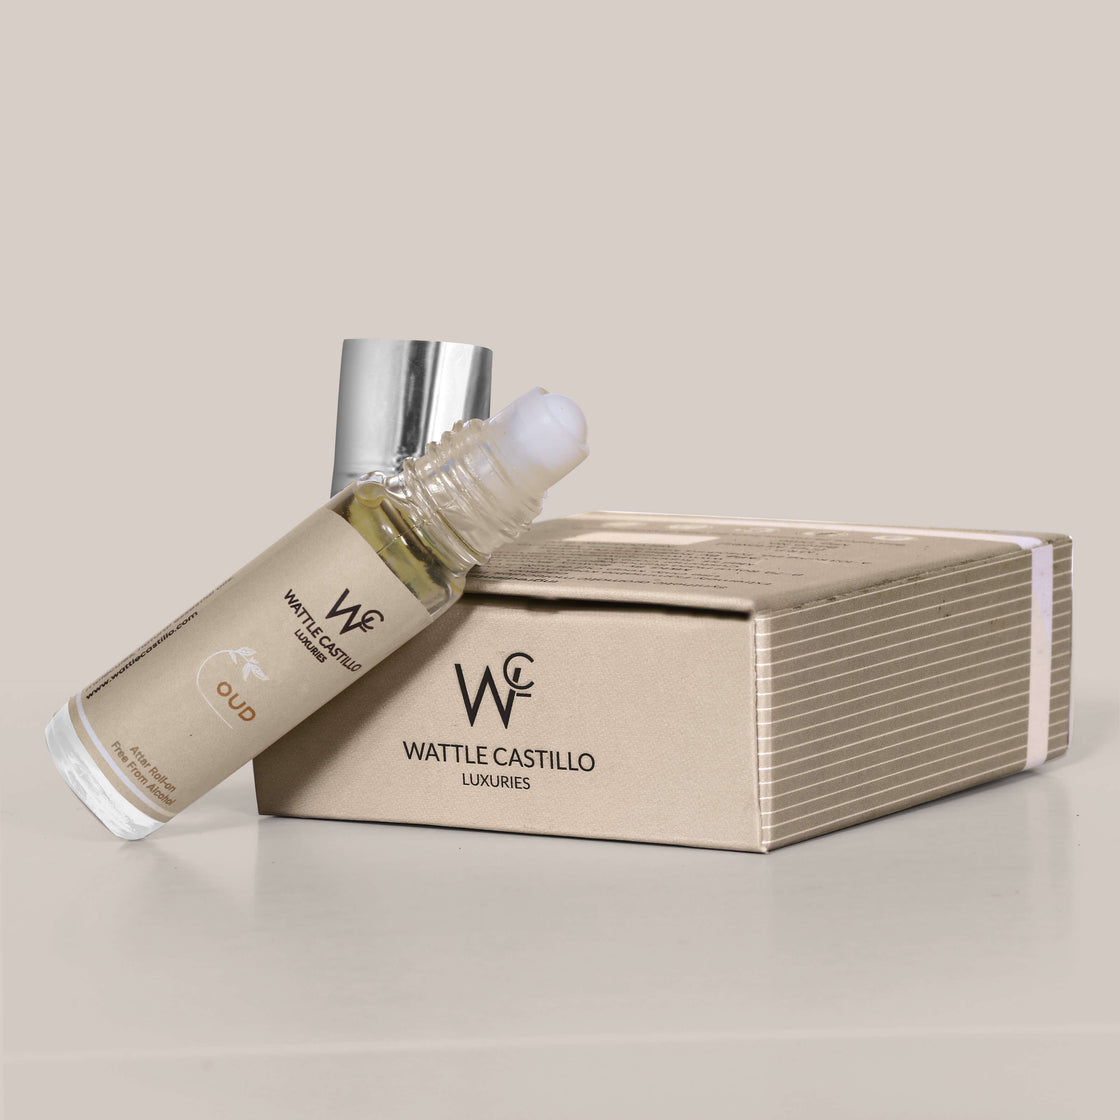 Wattle Castillo Holdme And Oud Premium Luxury 100% Non Alcoholic Long Lasting Roll On Attar Combo Perfume For Unisex - Wattle Castillo